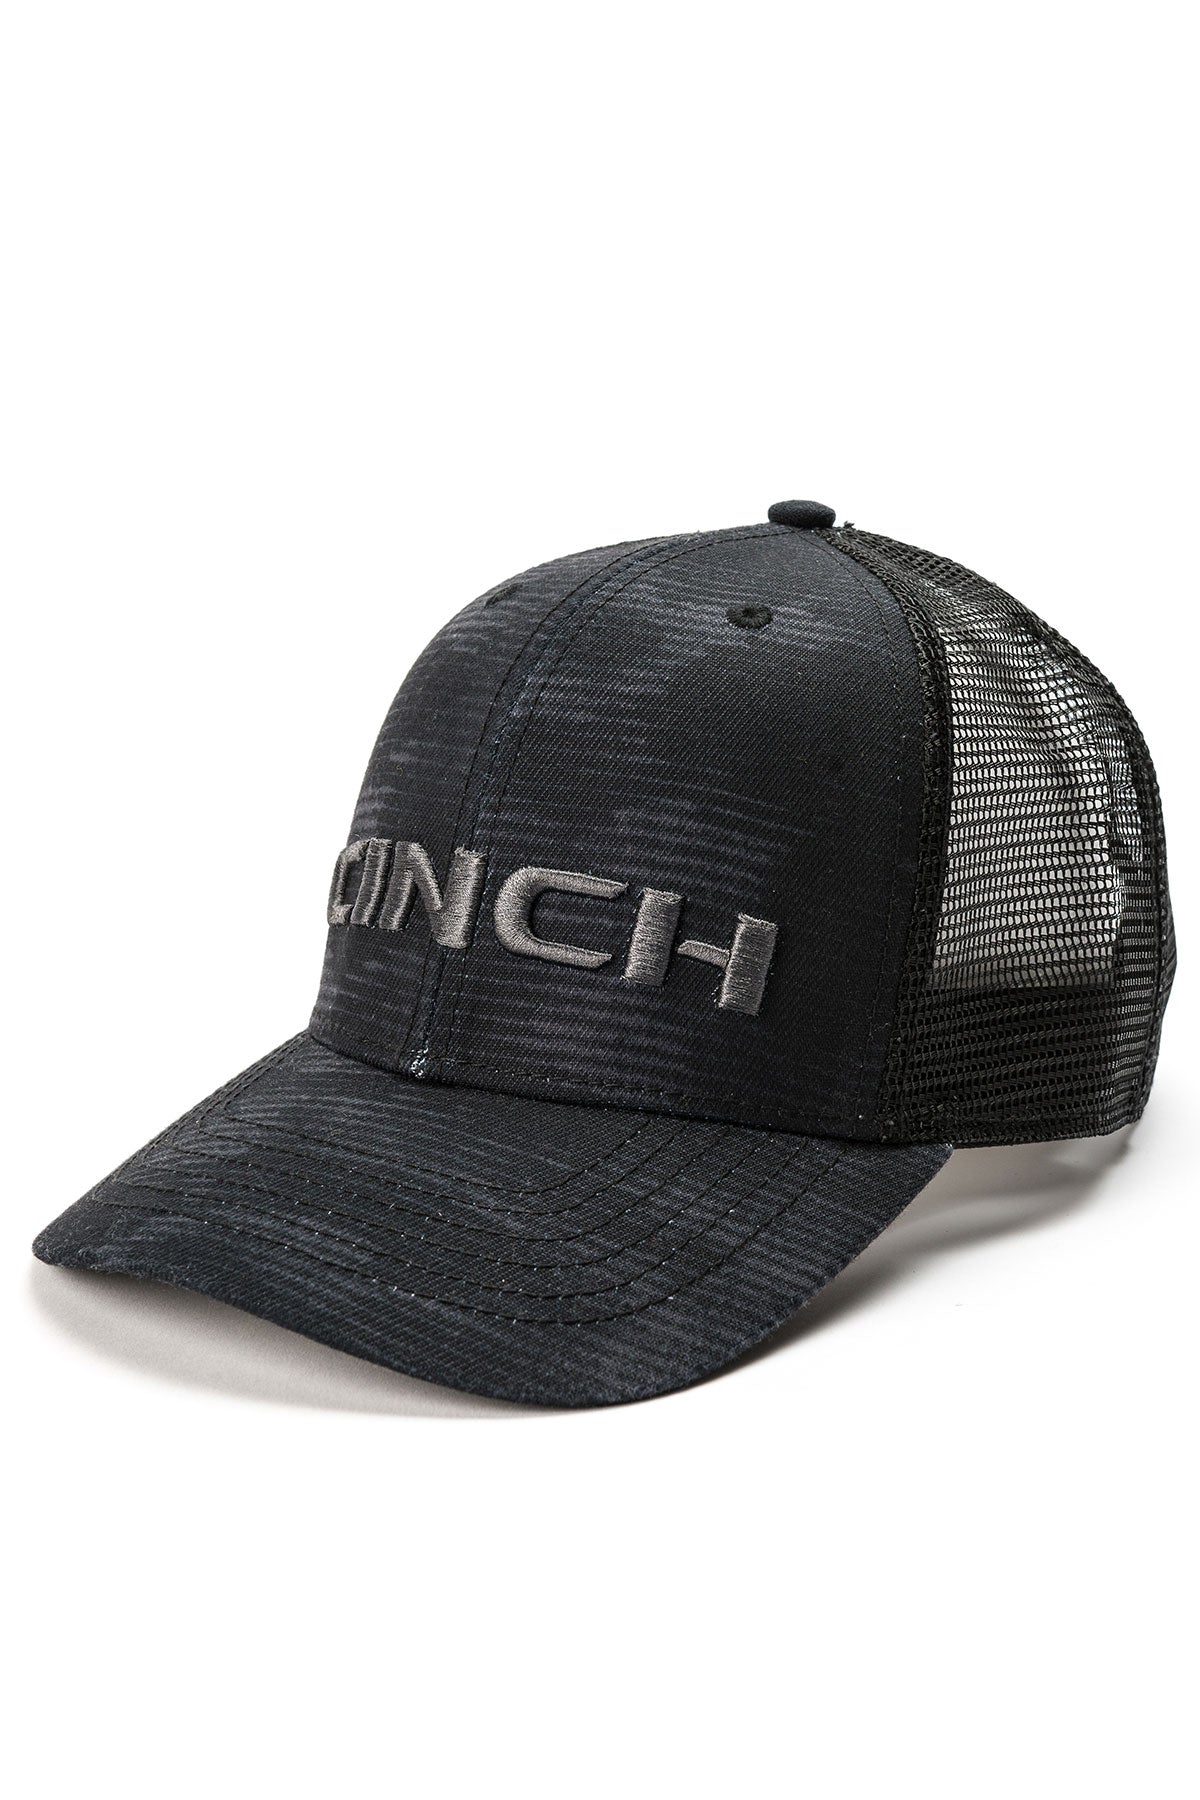 CINCH TRUCKER HAT